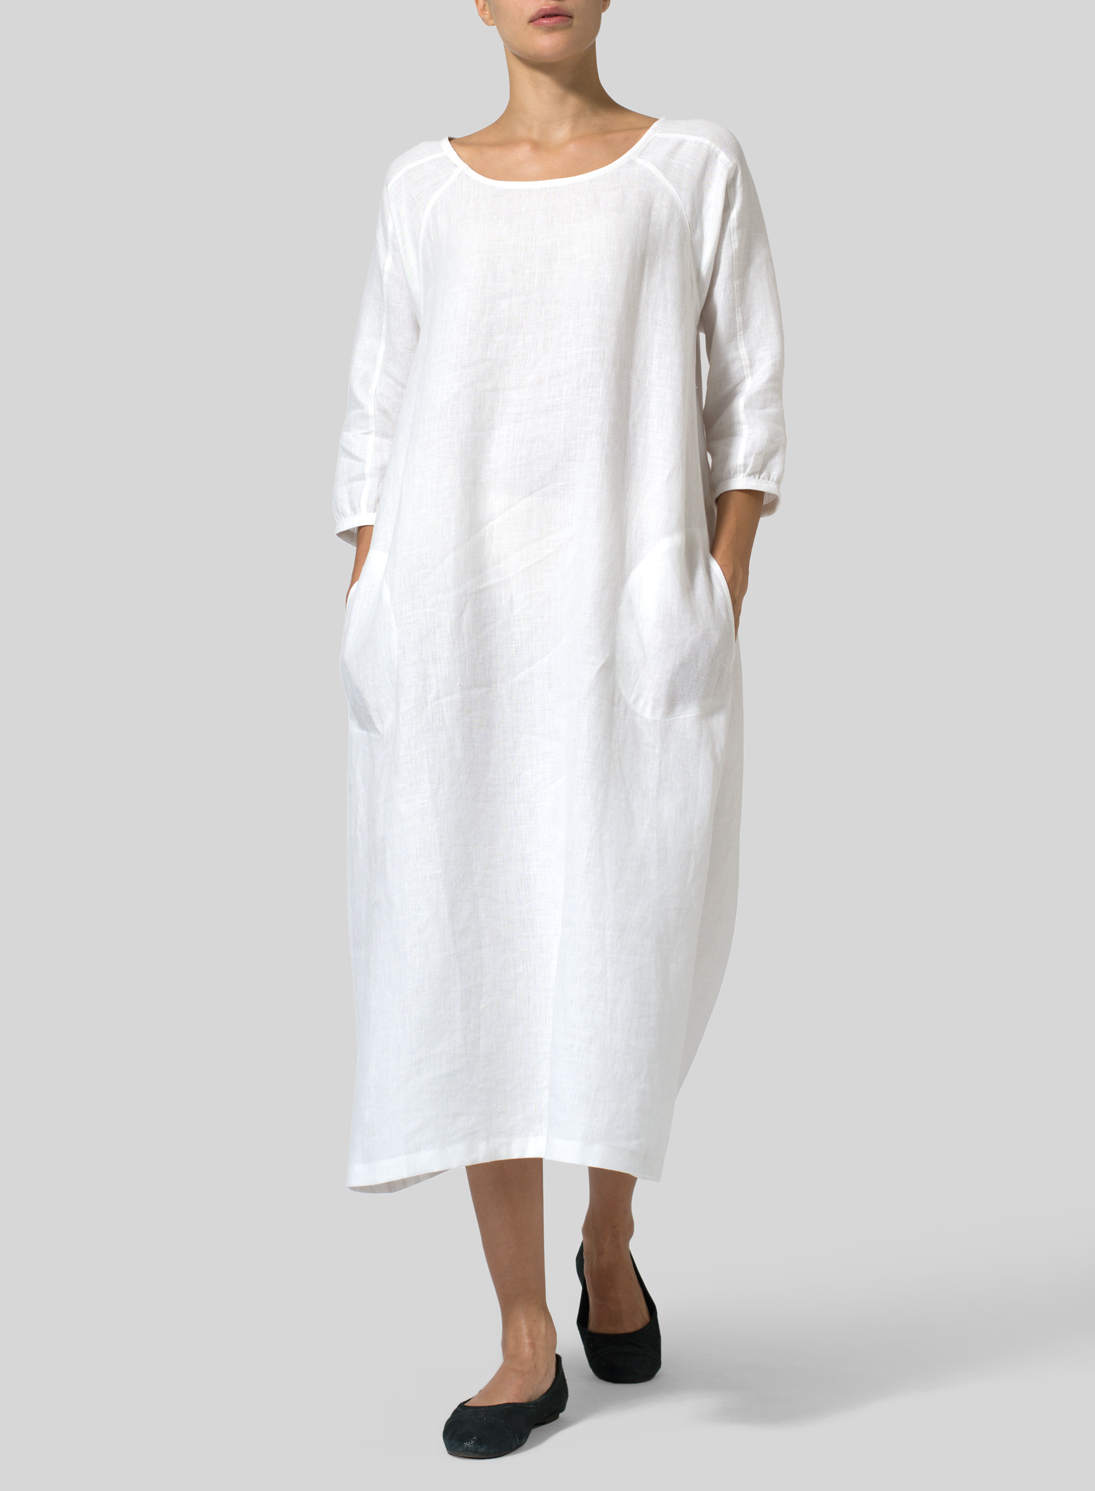 Linen Elbow Sleeve Long Dress - Plus Size